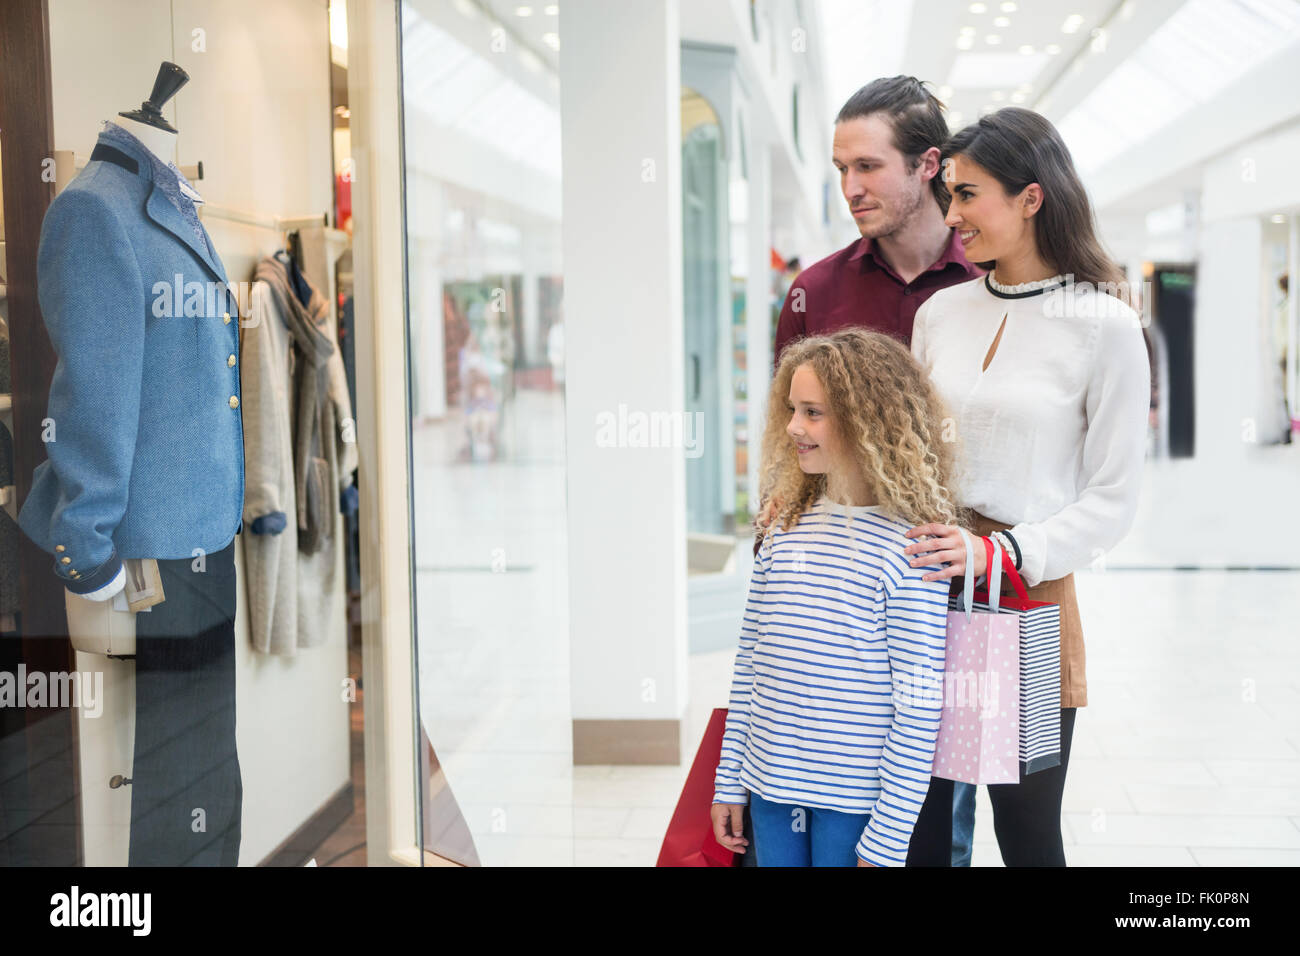 Happy family window shopping in mall Stock Photo